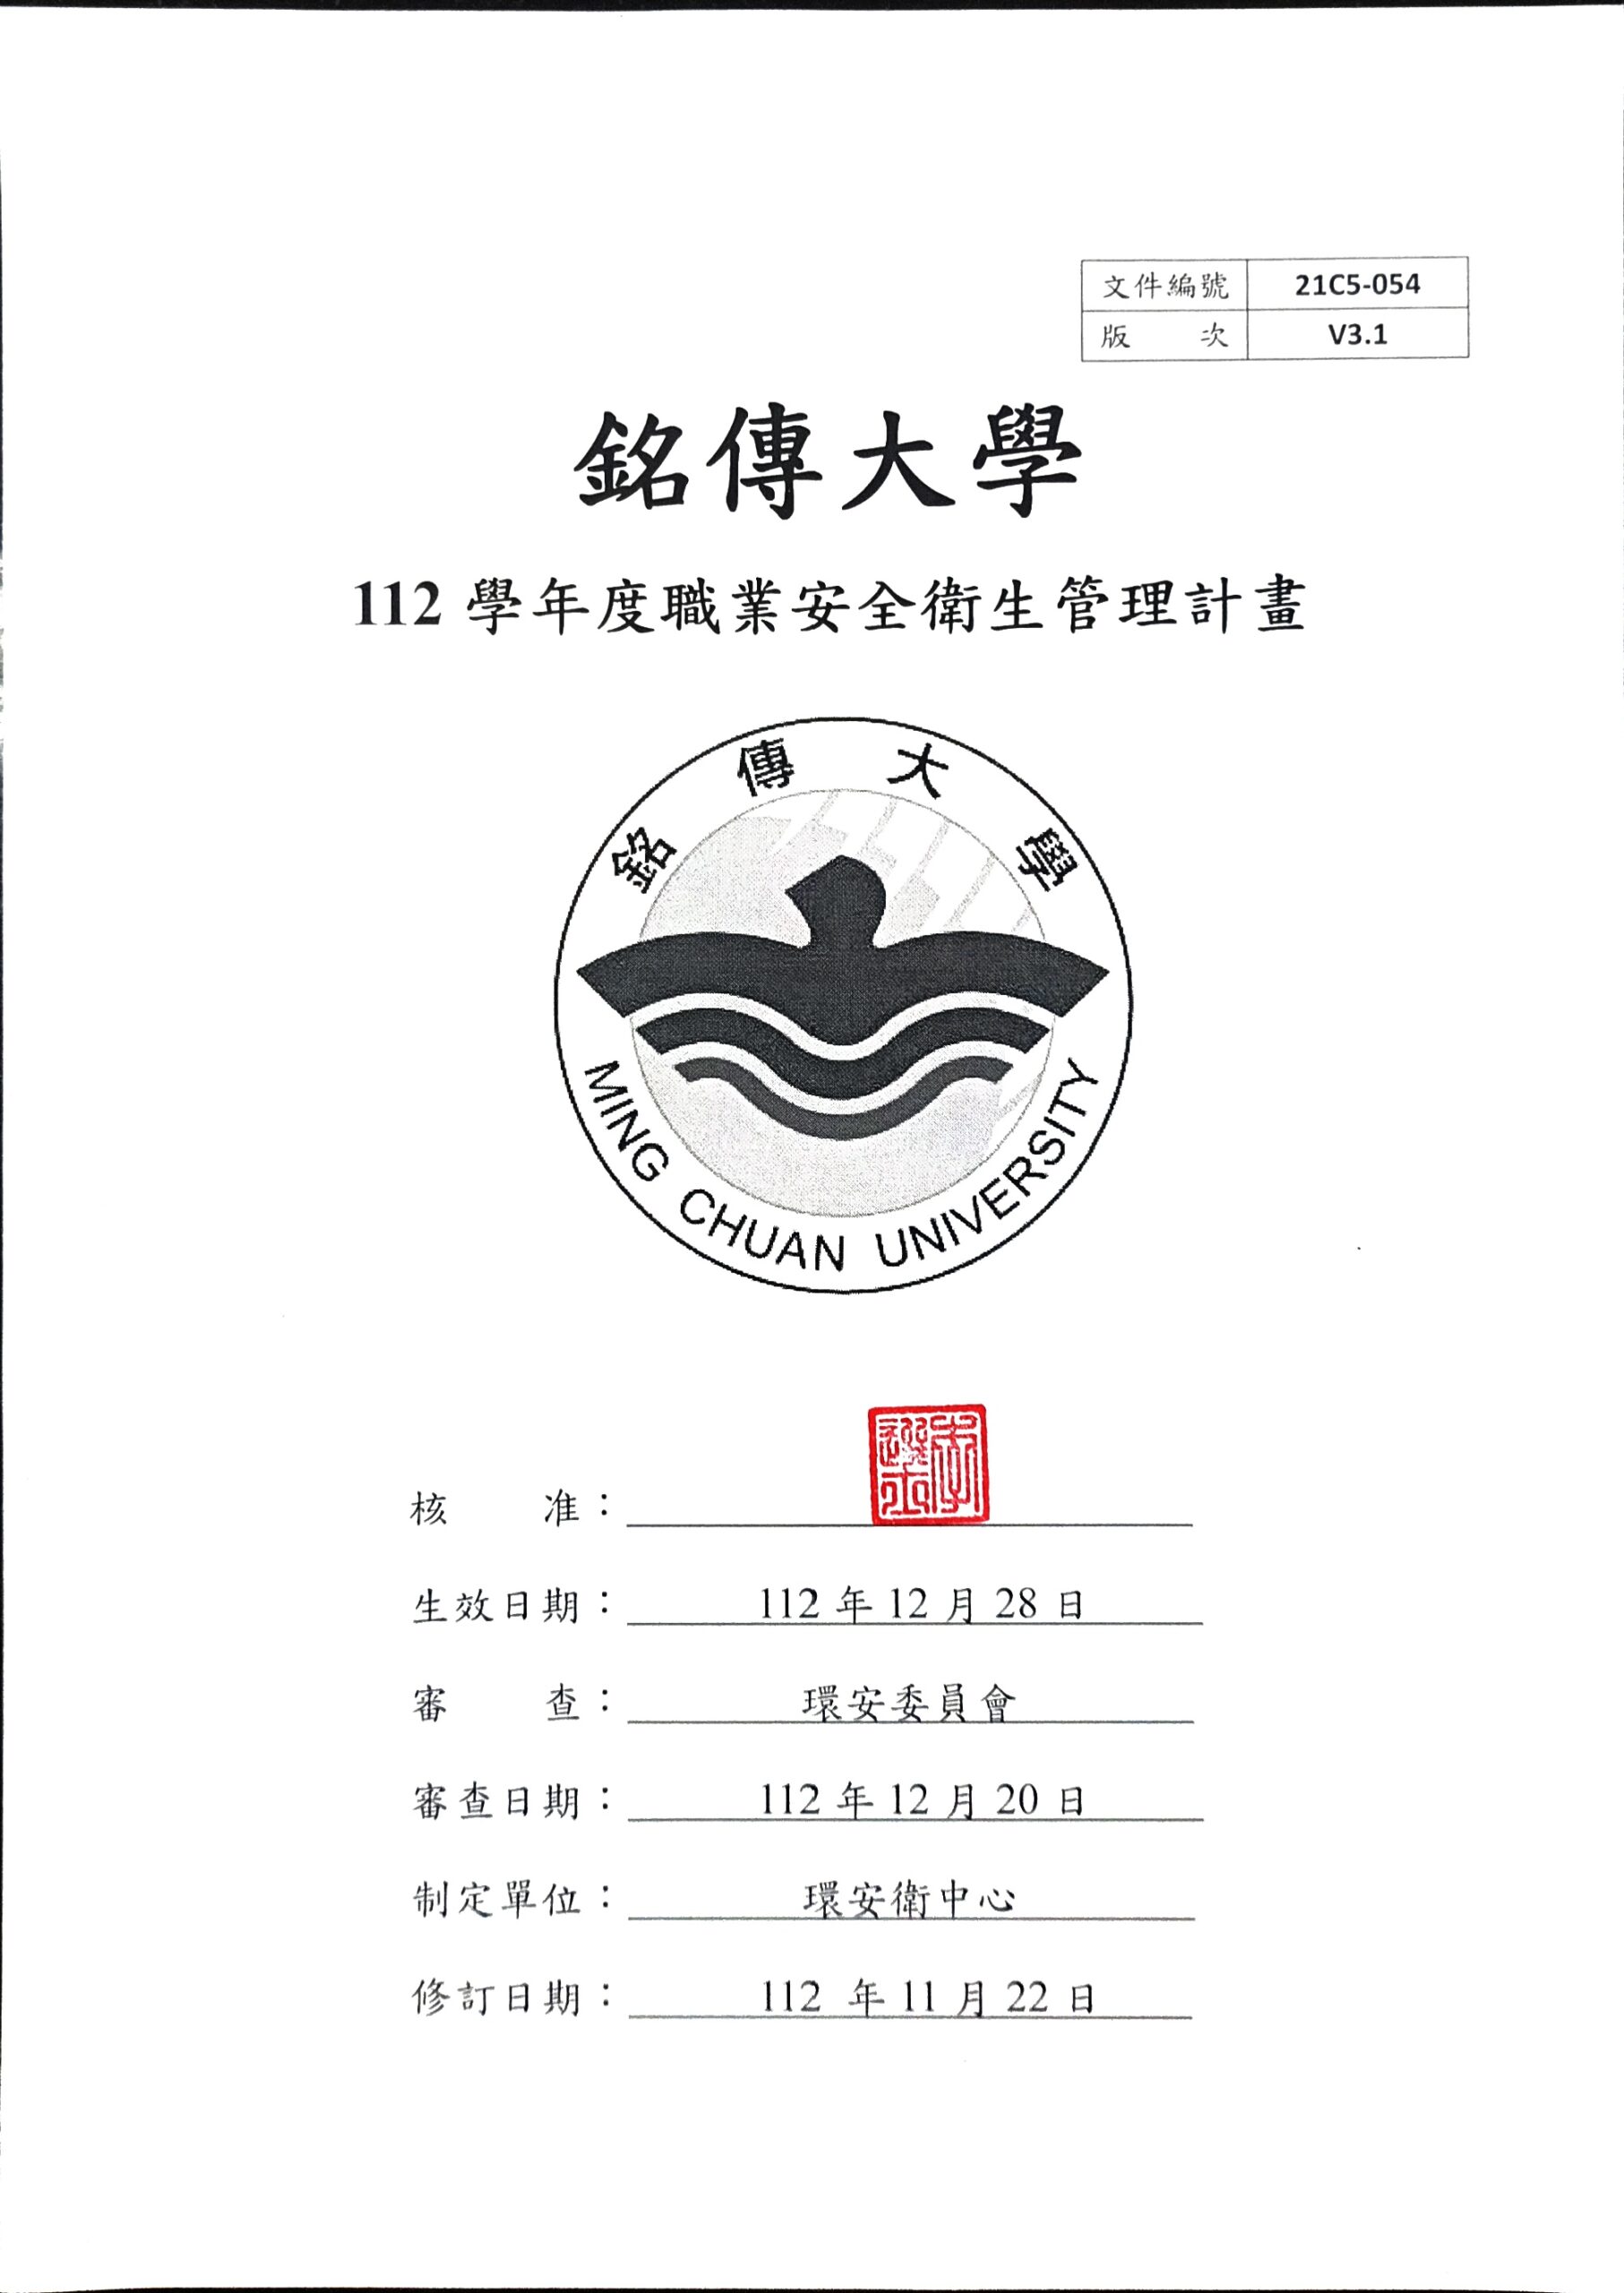 Featured image for “銘傳大學 職業安全衛生管理計畫已於112年12月28日校長核定公佈實施”